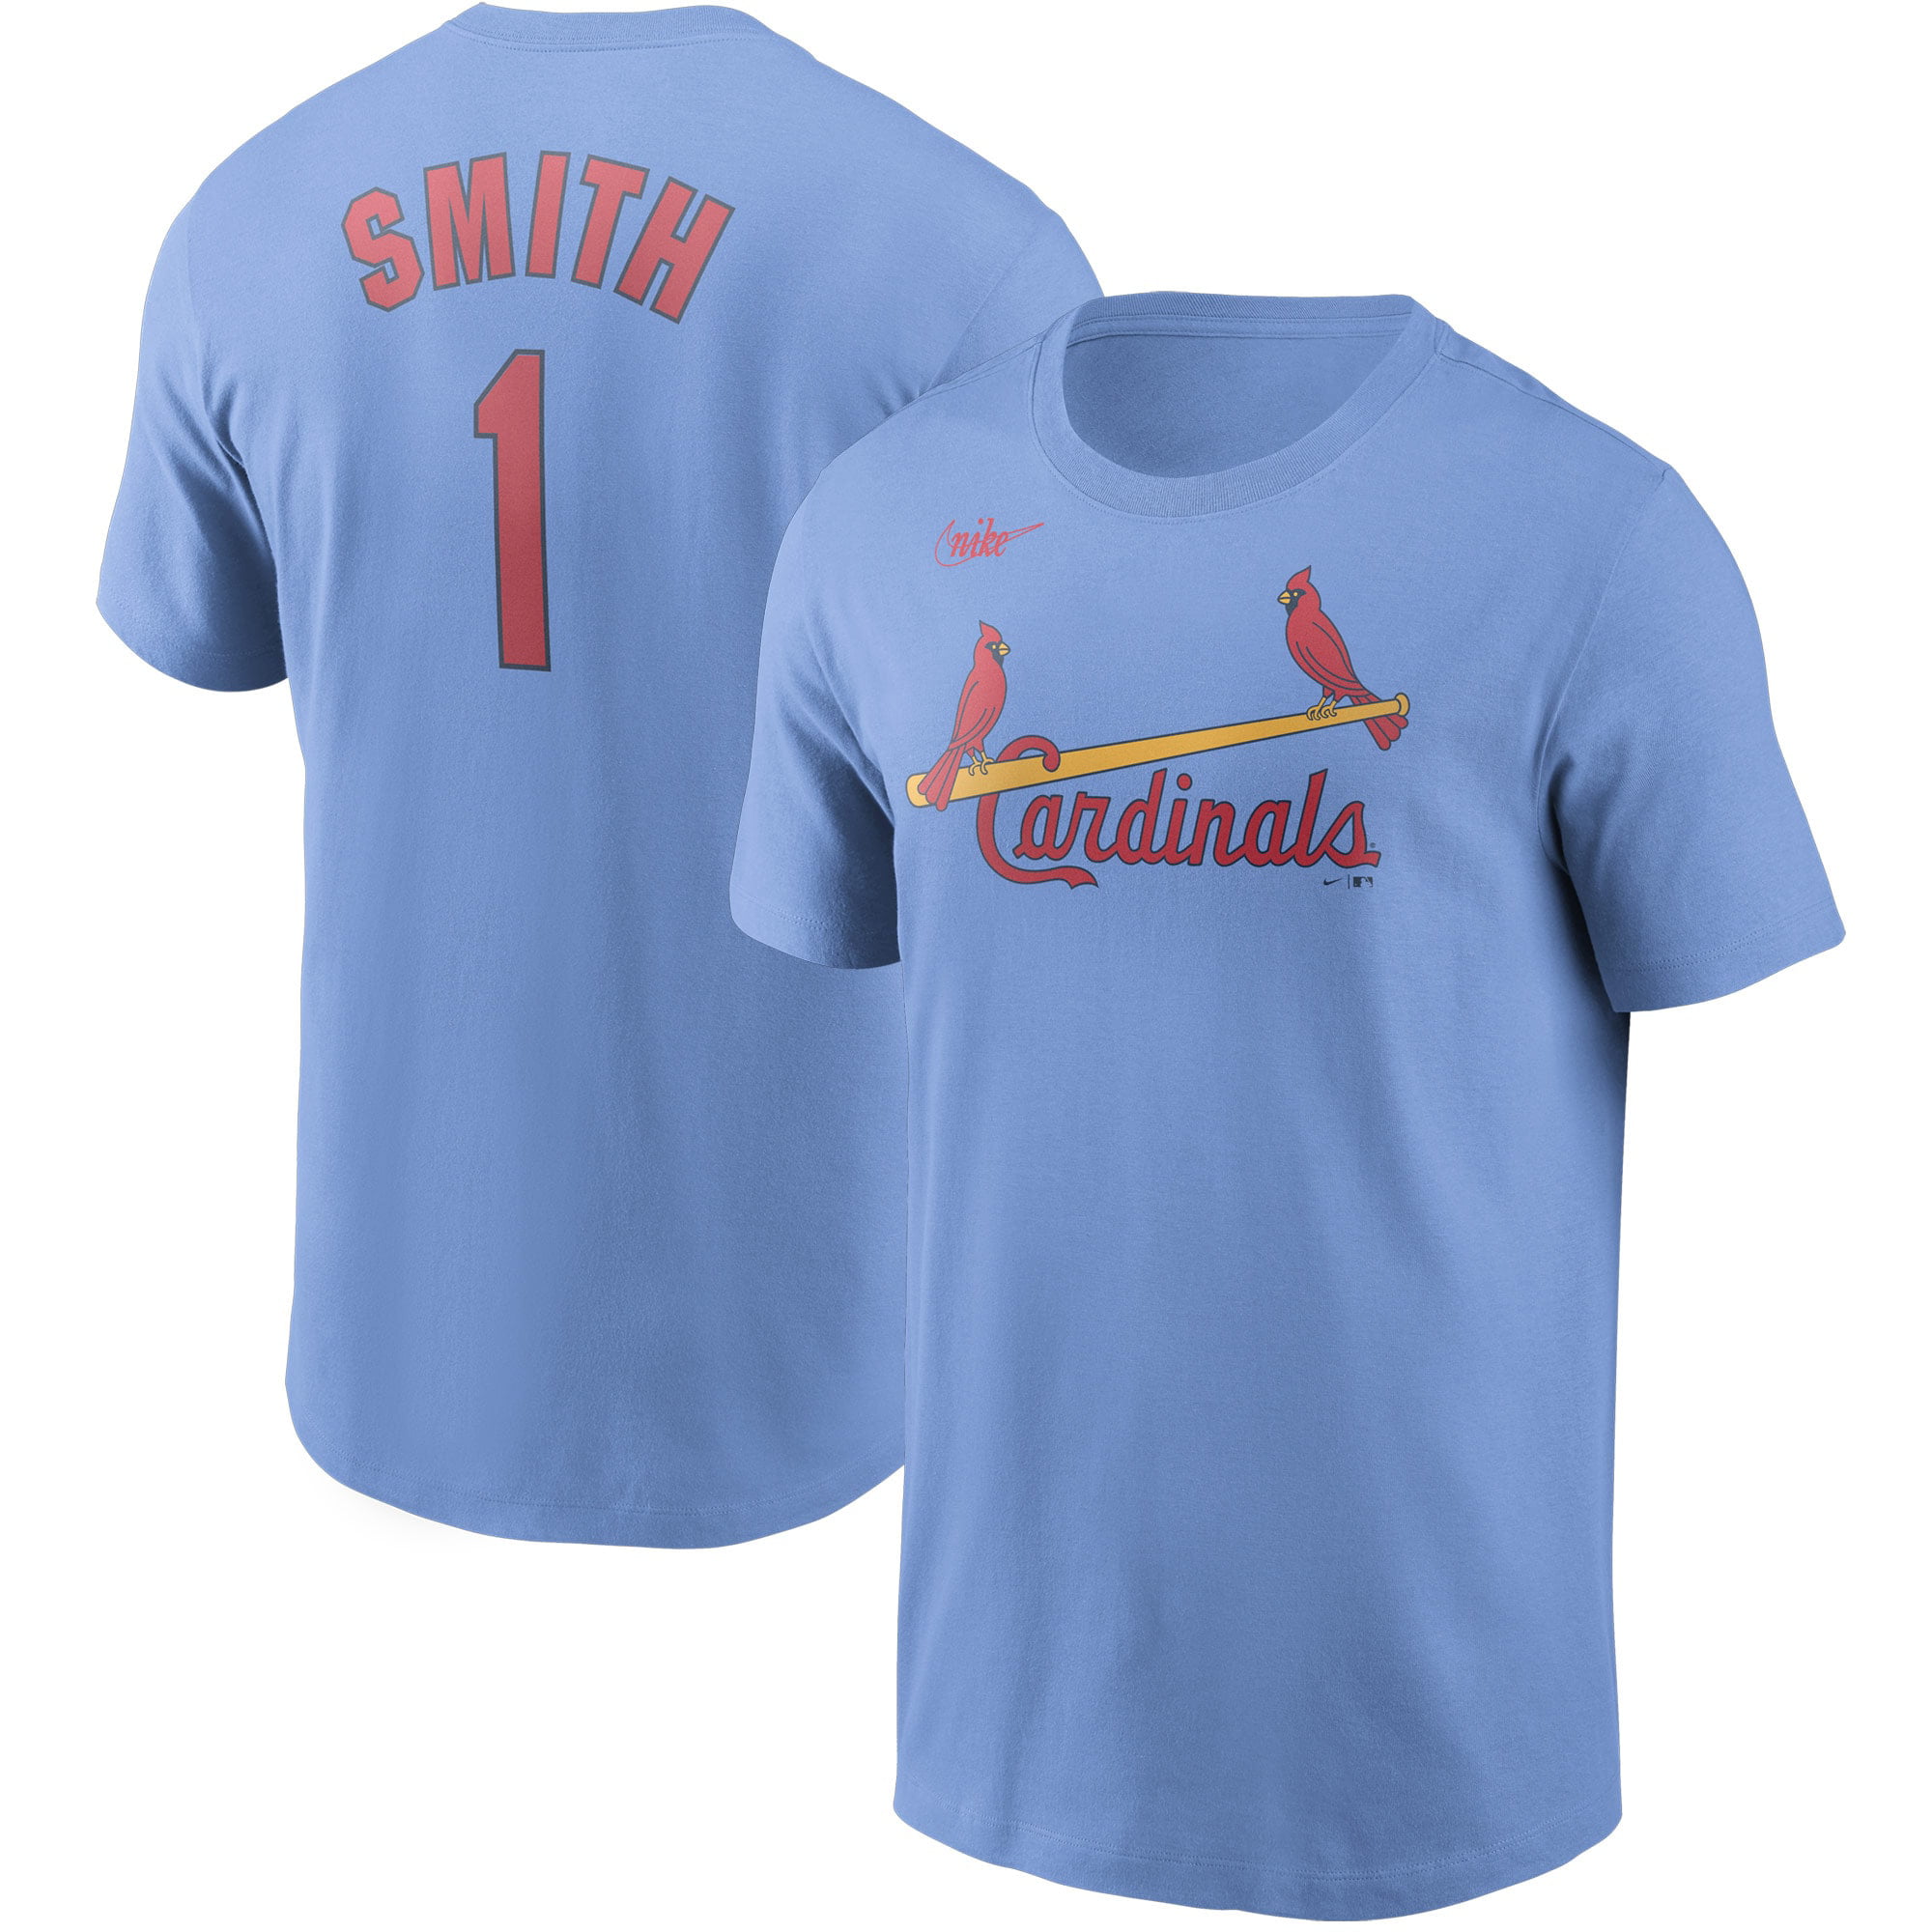 cardinals t shirts sale